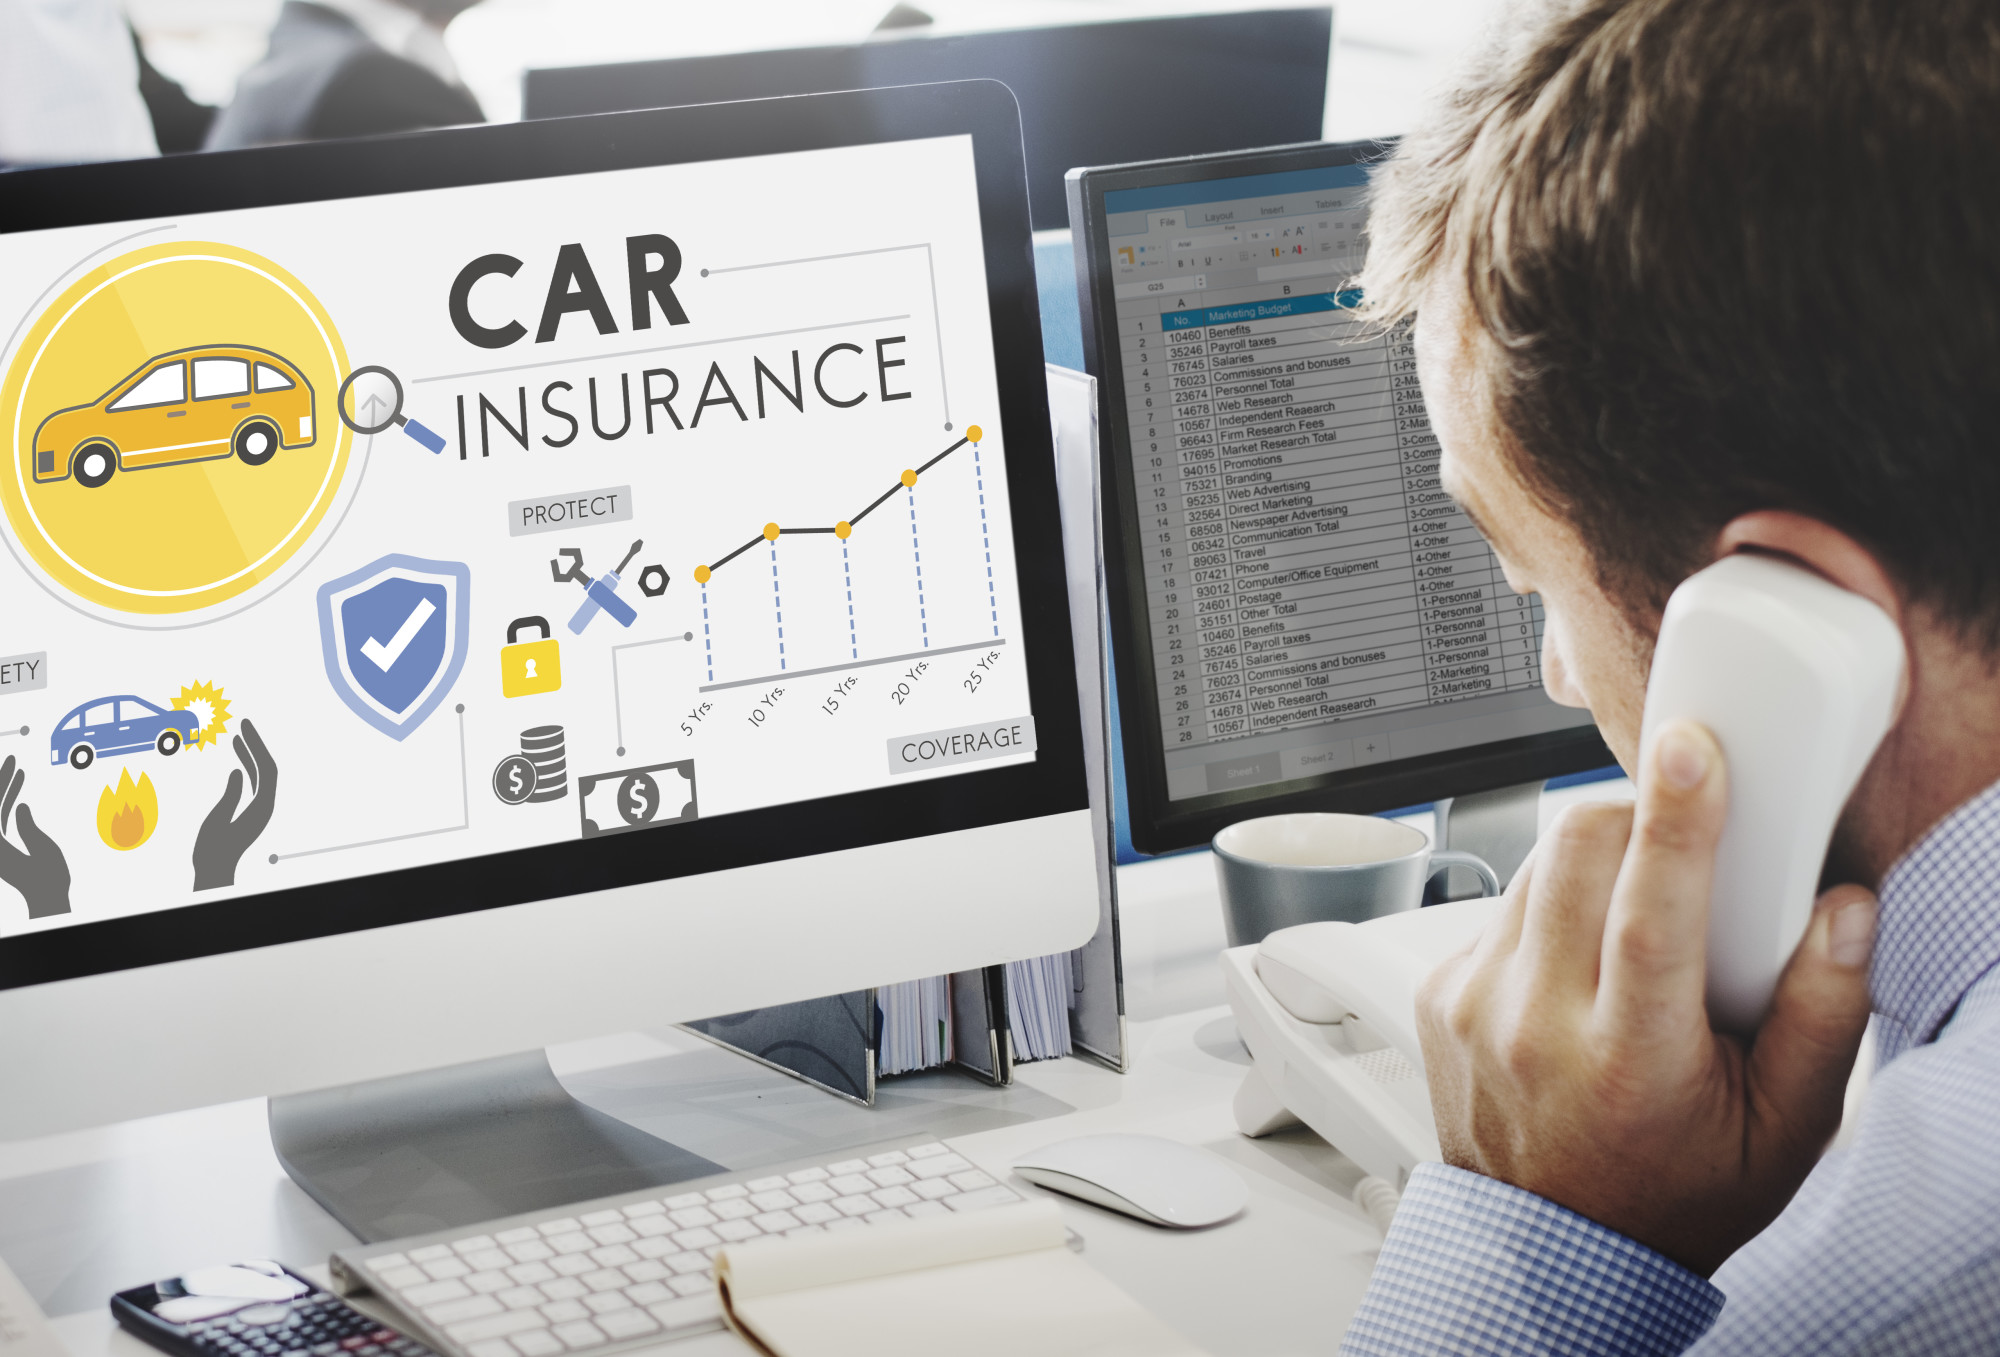 Auto Insurance Basics A Beginner's Guide to Auto Insurance Go Motors